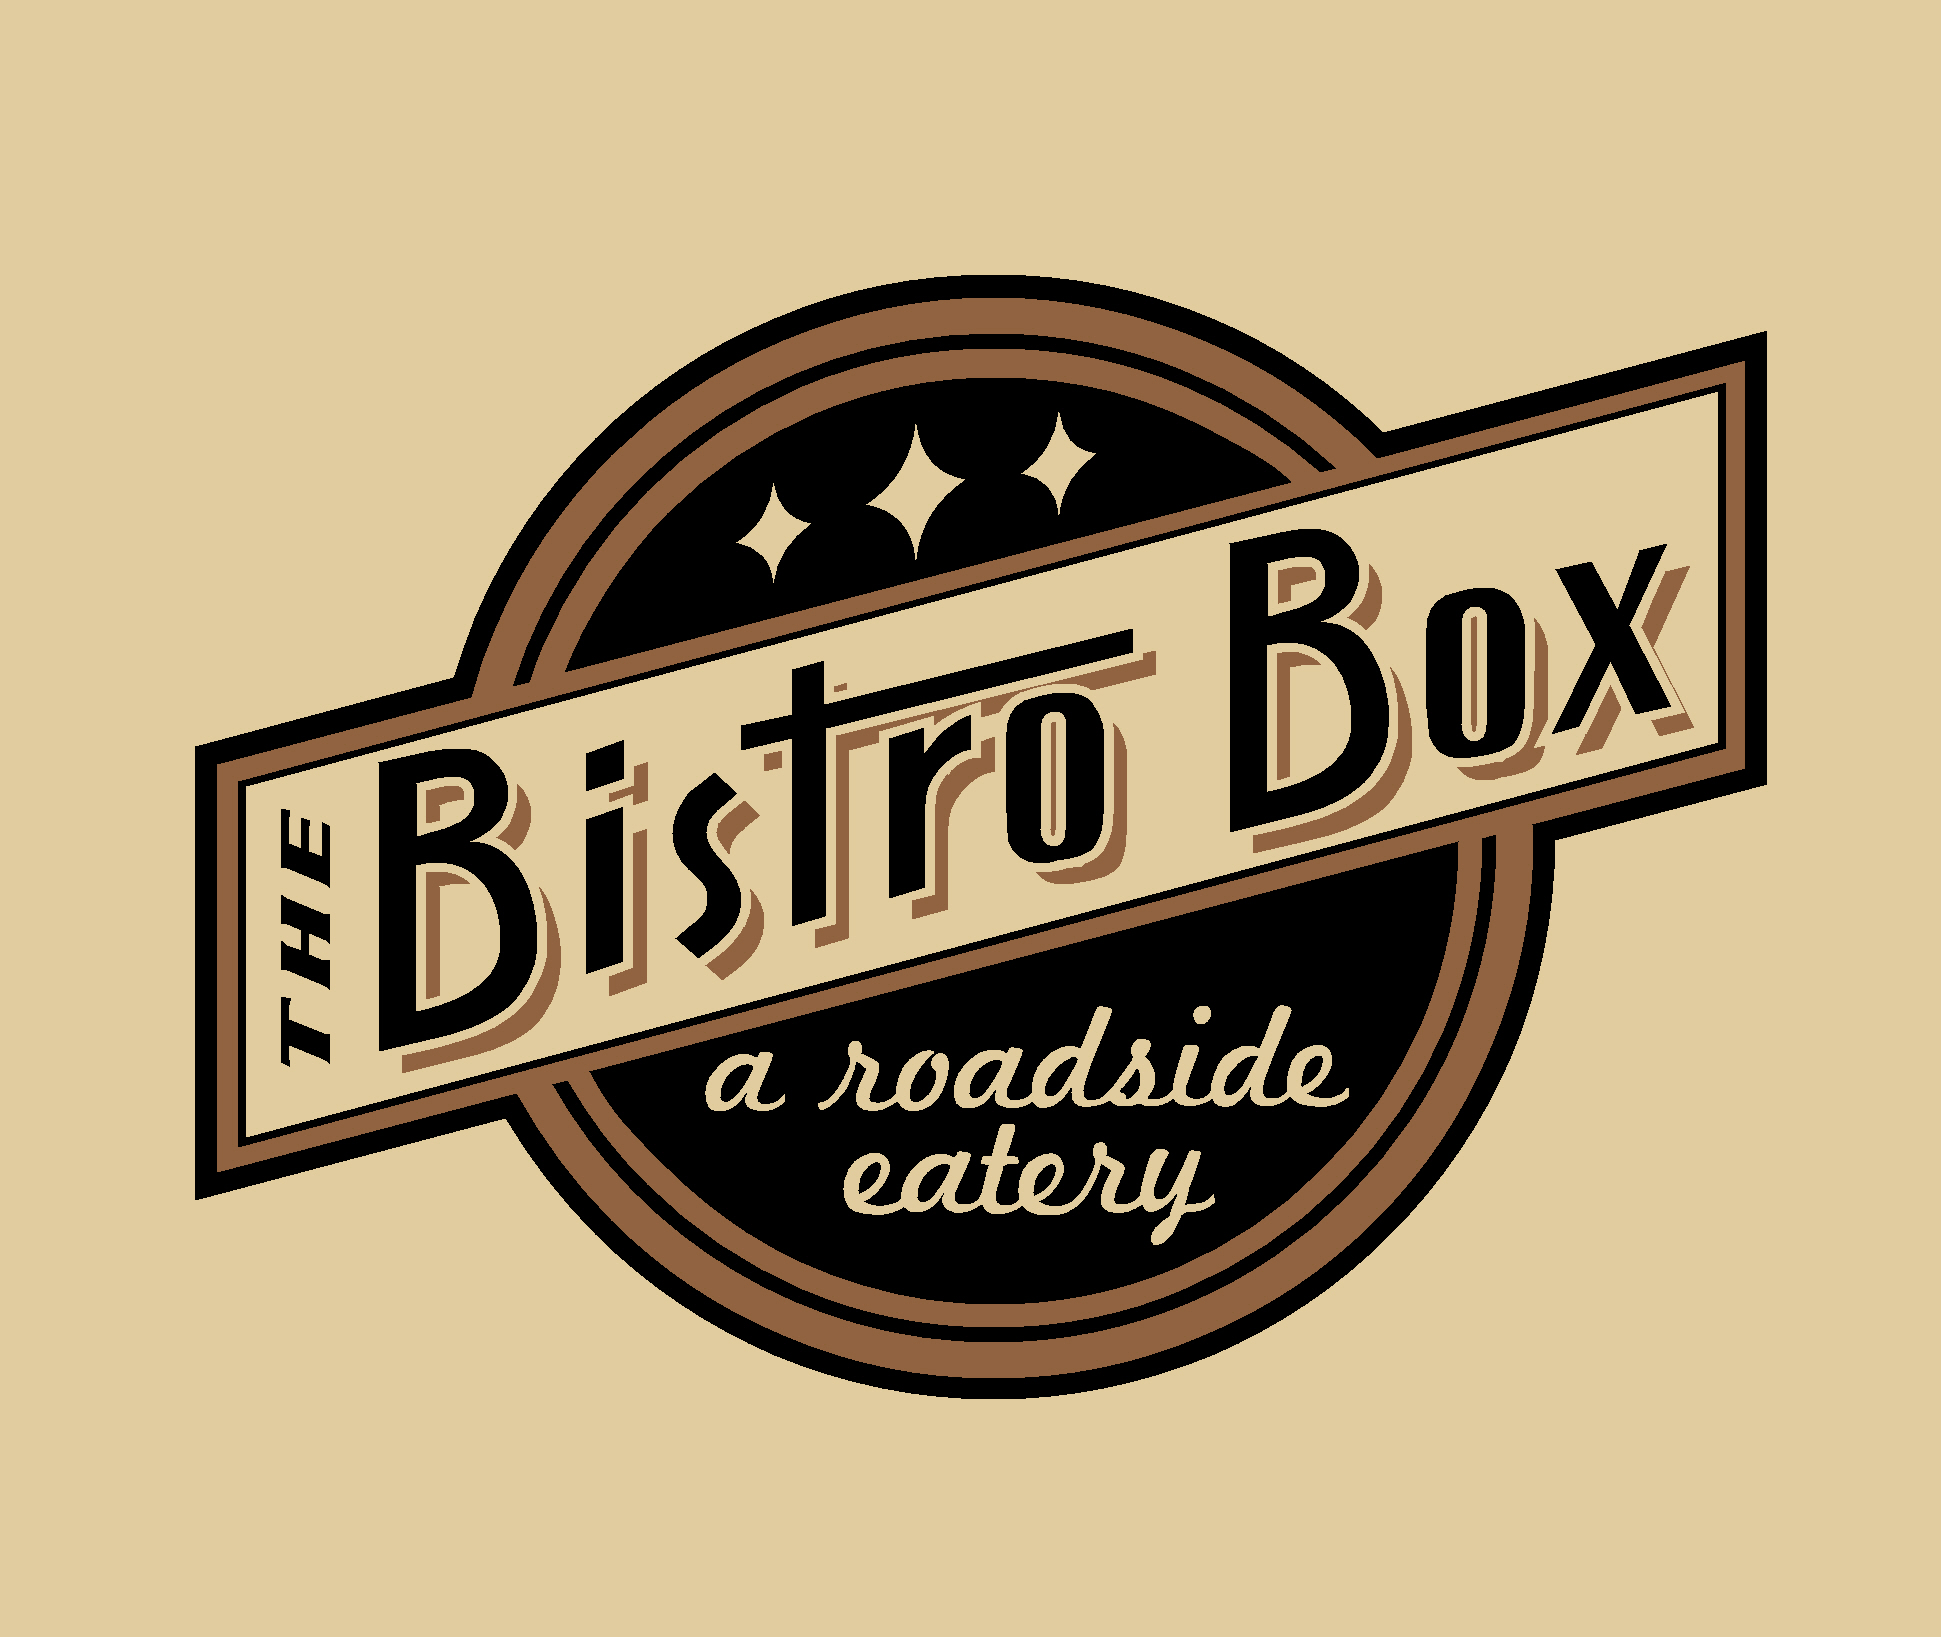 bistro box logo 16.jpg